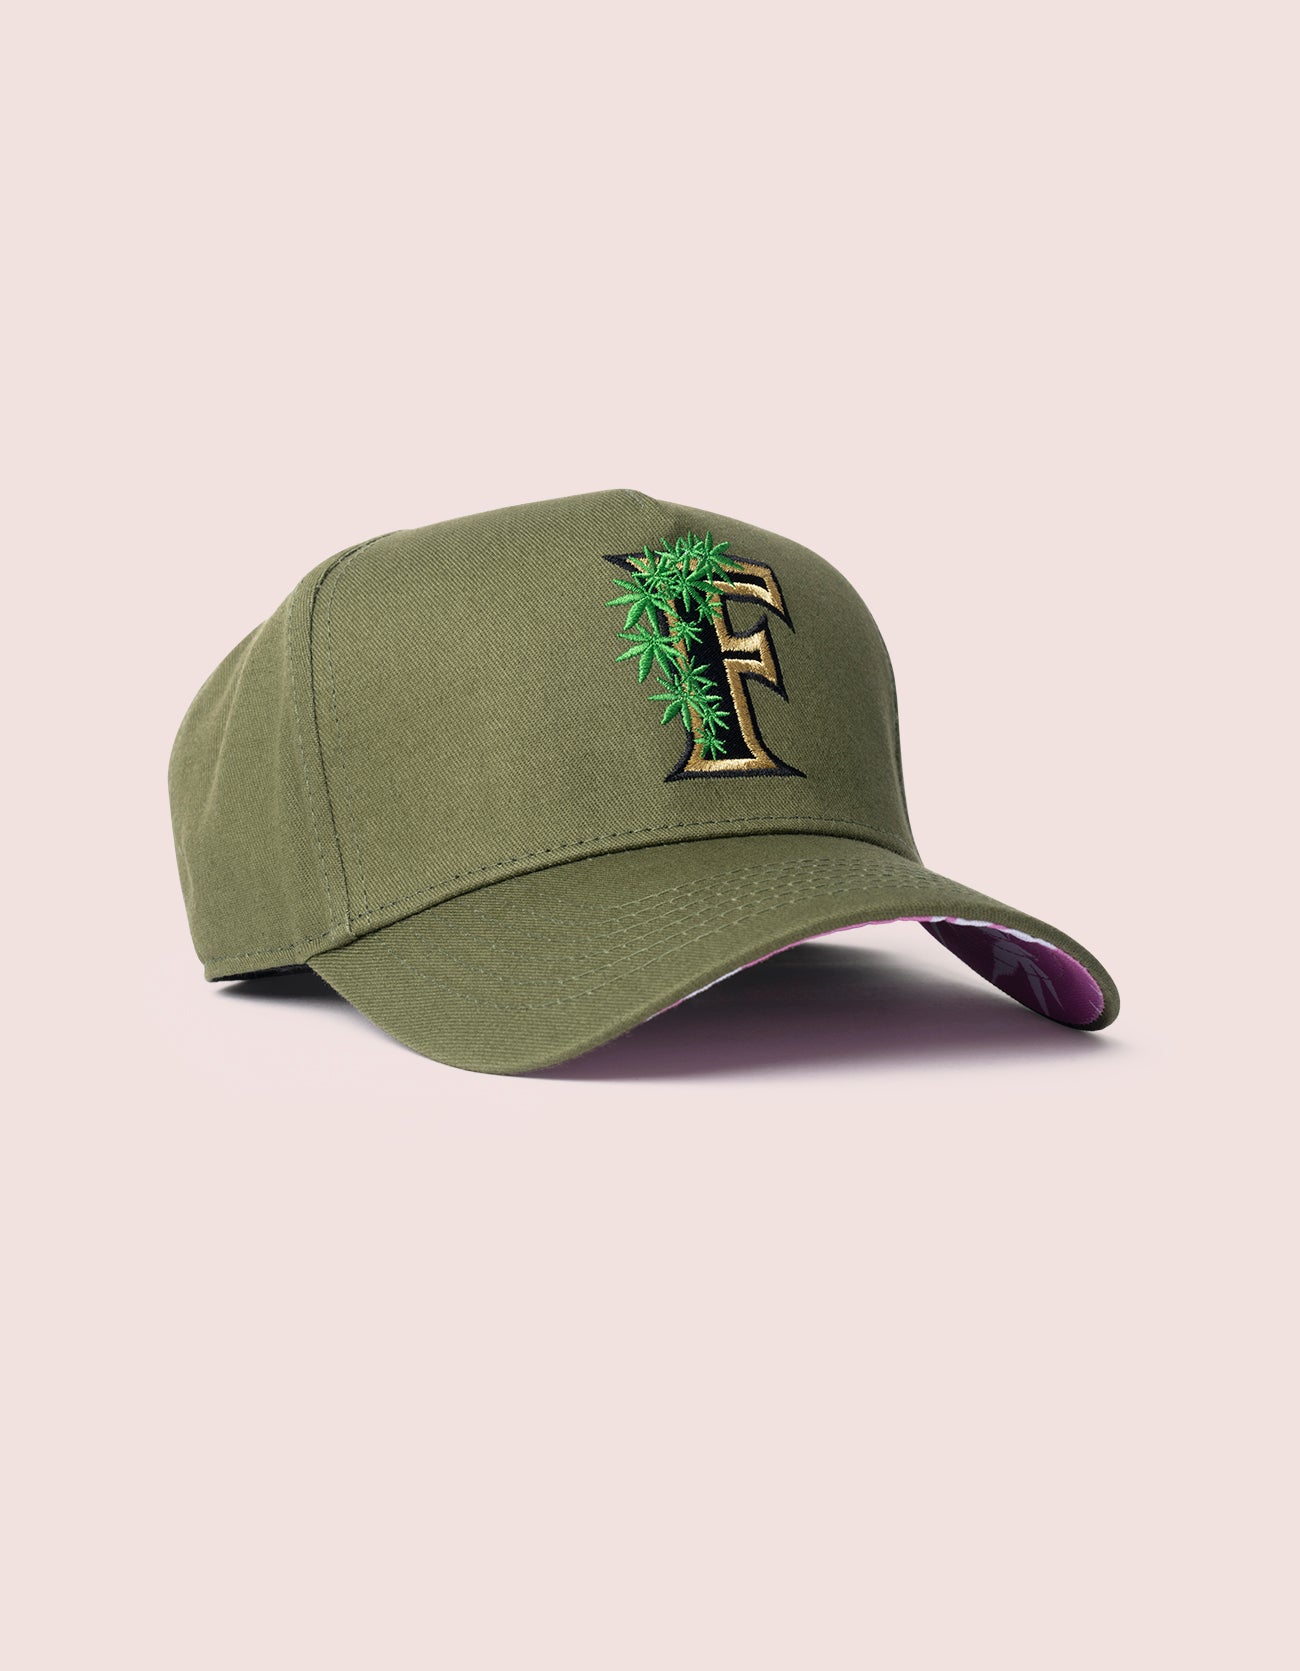 Flee Farms Green Rockstar Hat